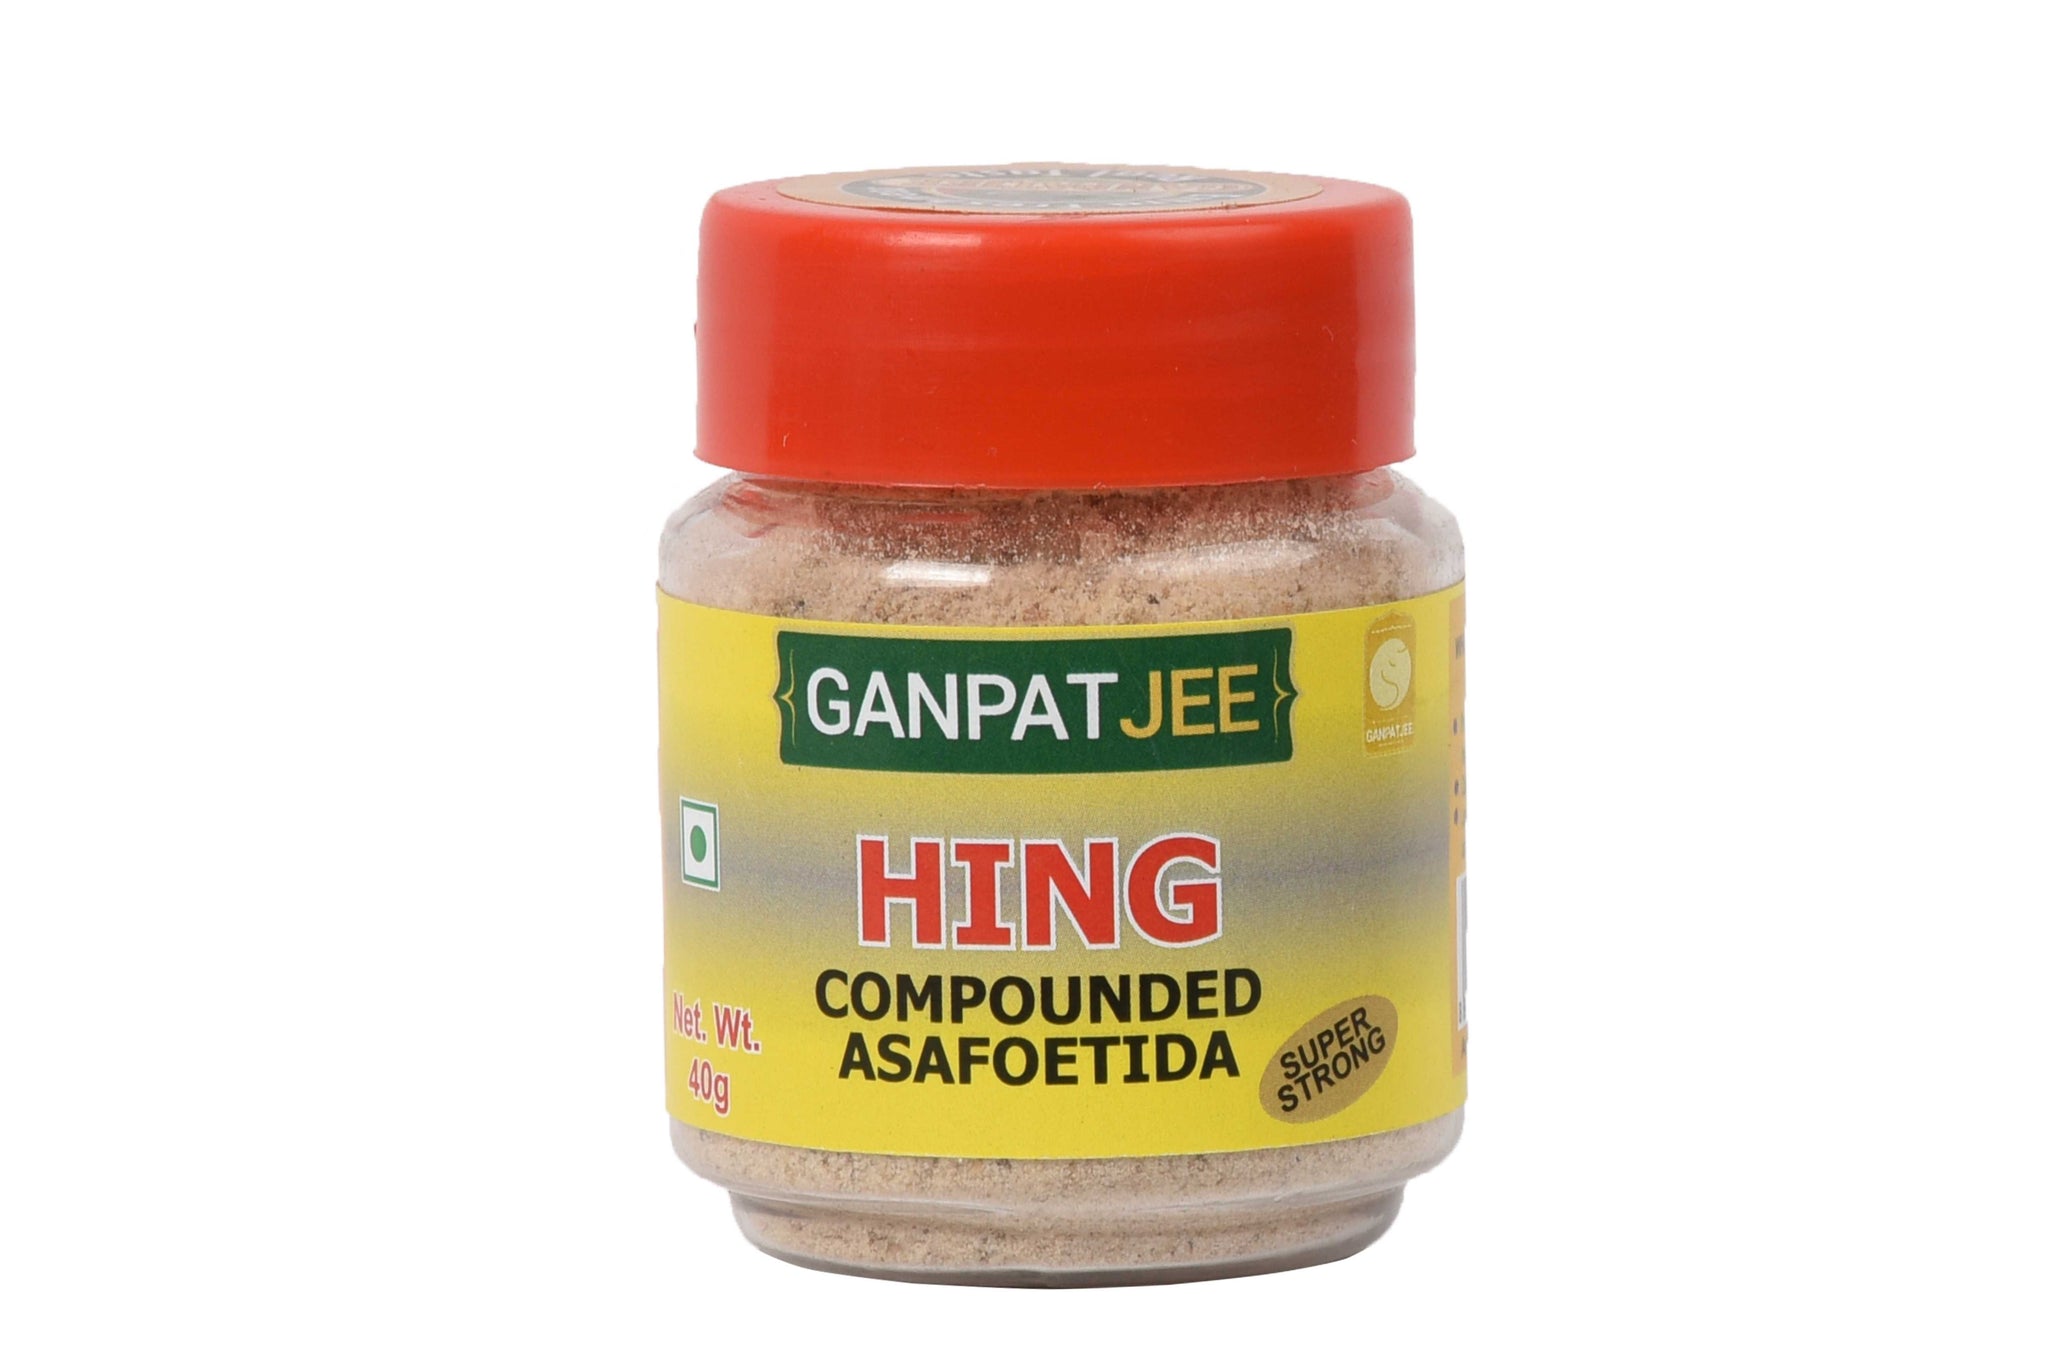 Ganpatjee Hing Compounded Asafoetida Powder, 40g